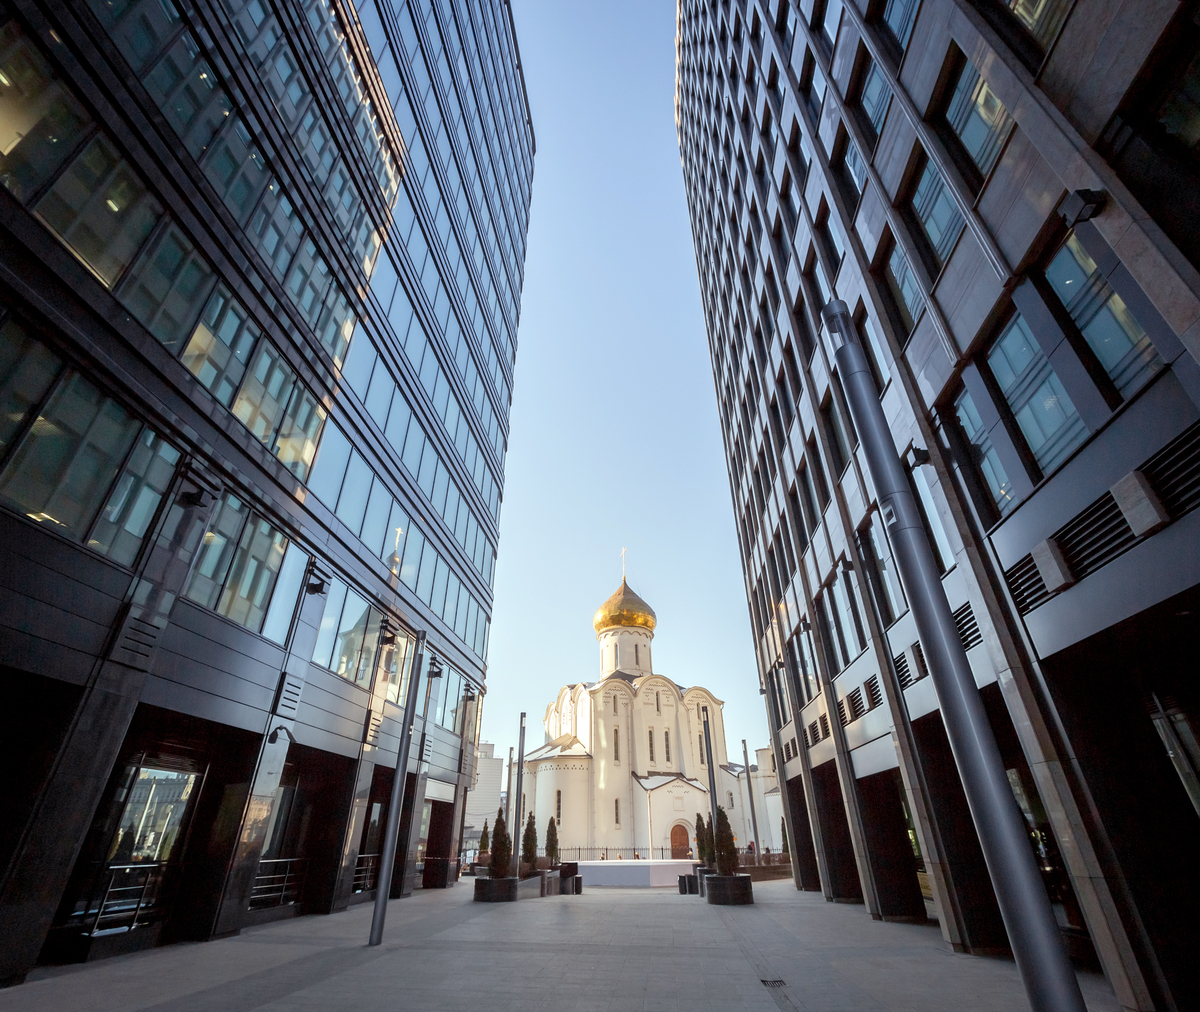 Продвижение турпотенциала Москвы в рамках онлайн- и офлайн-мероприятий в 2021 году